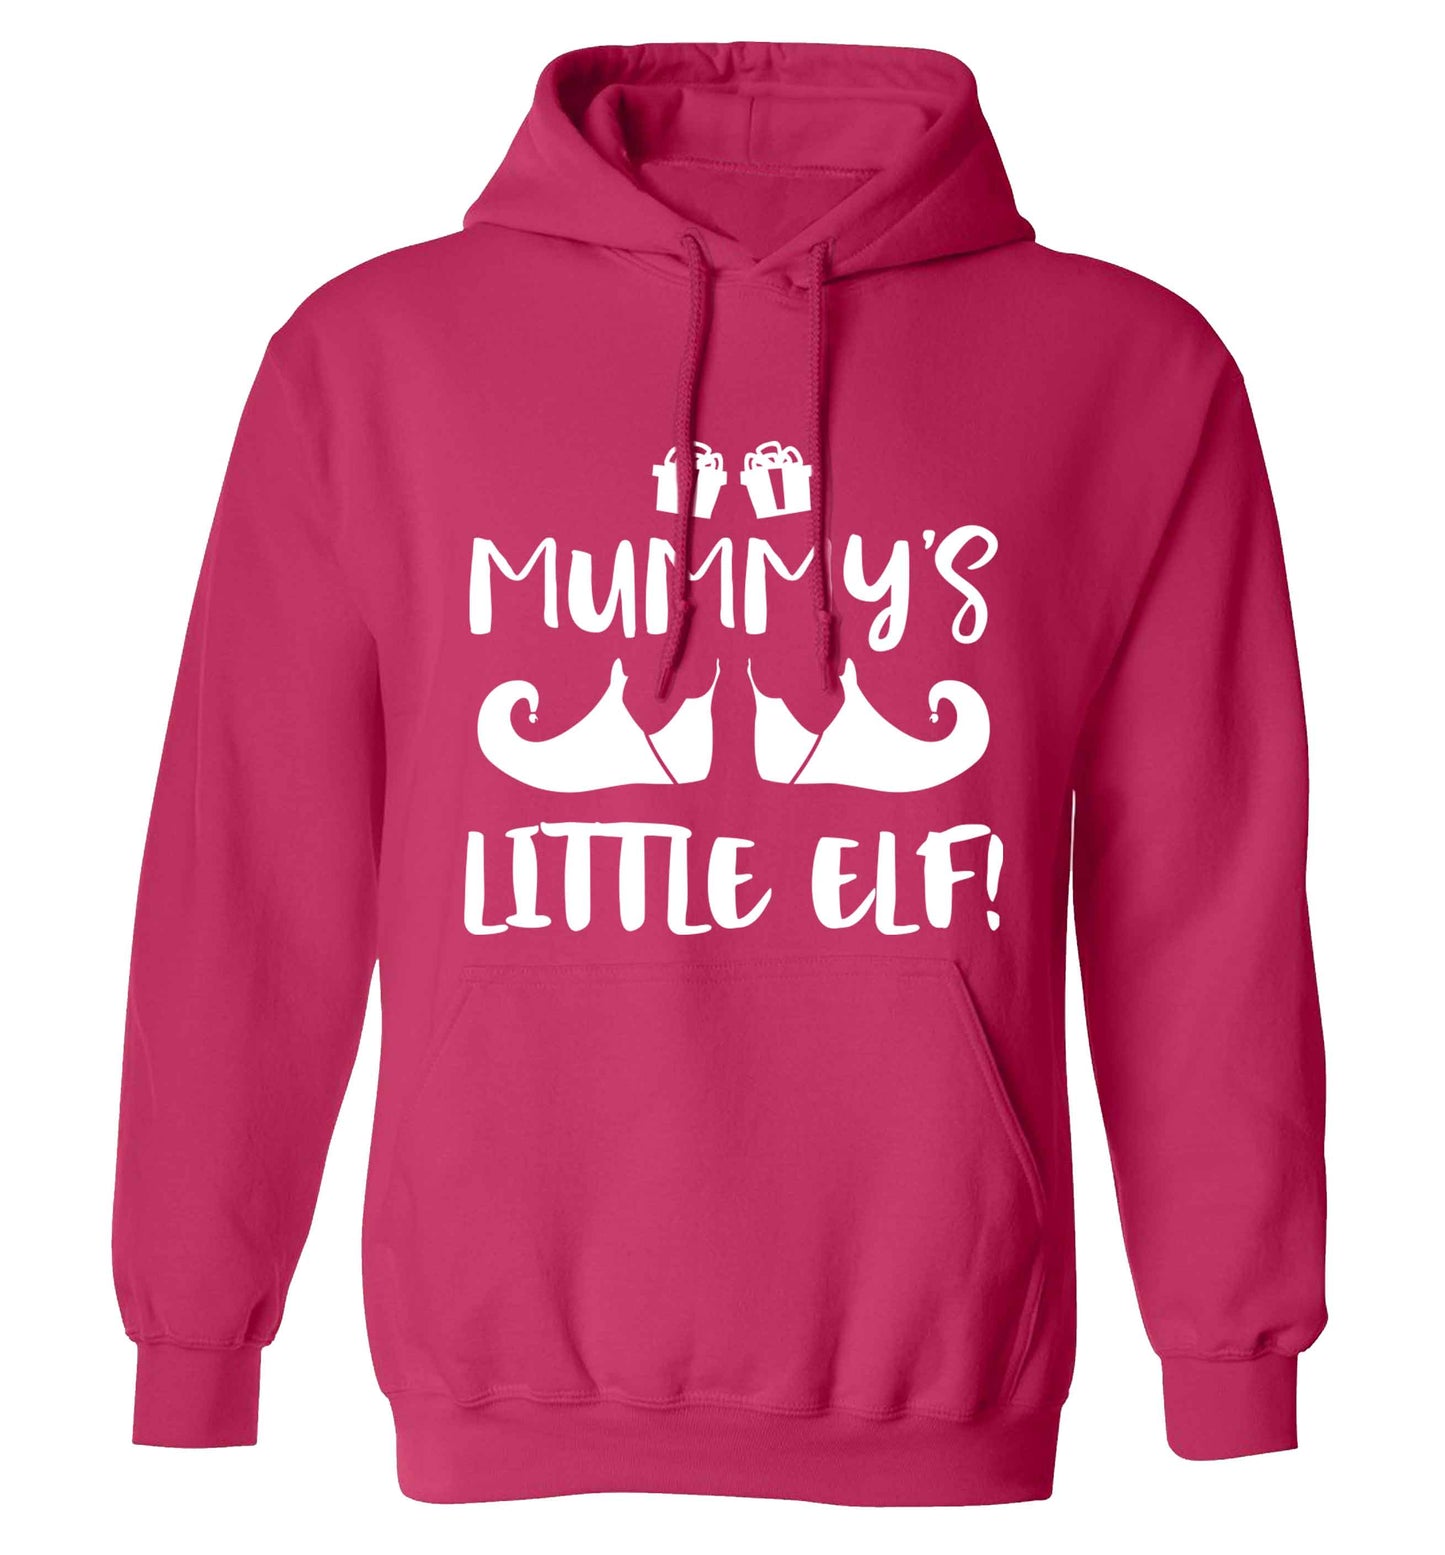 Mummy's little elf adults unisex pink hoodie 2XL